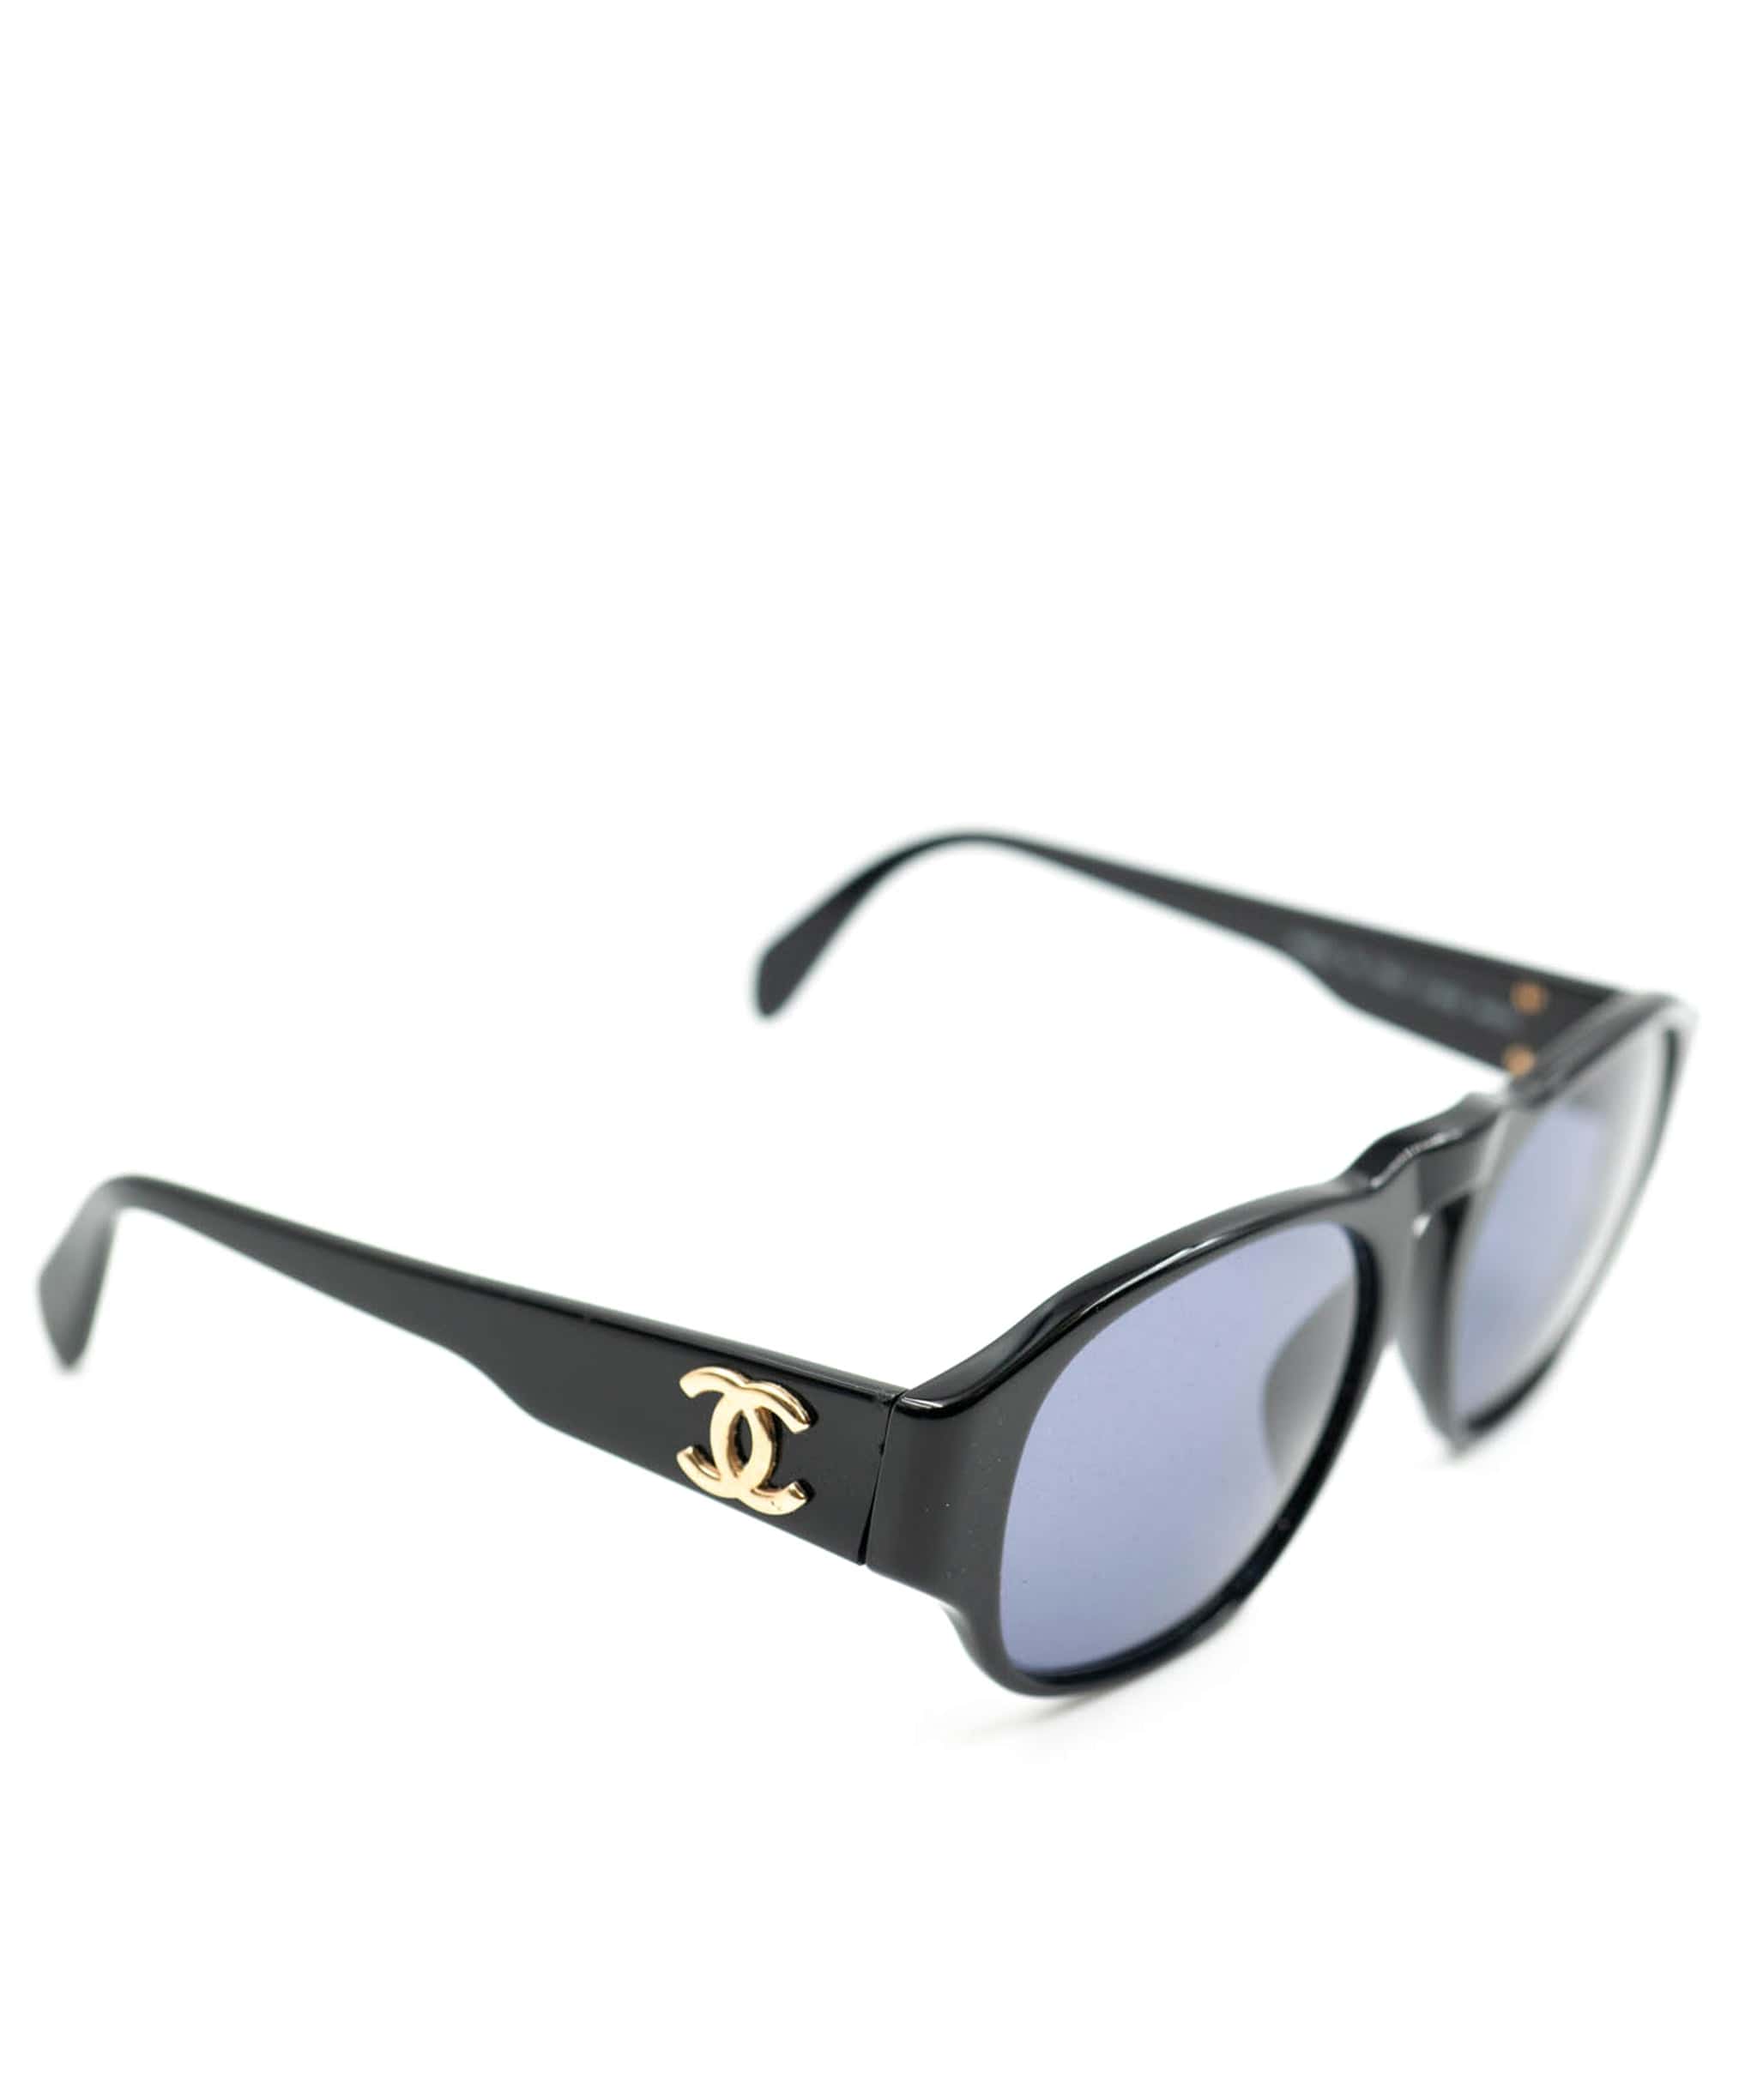 Chanel Chanel 01452 CC Sunglasses - AWL3729